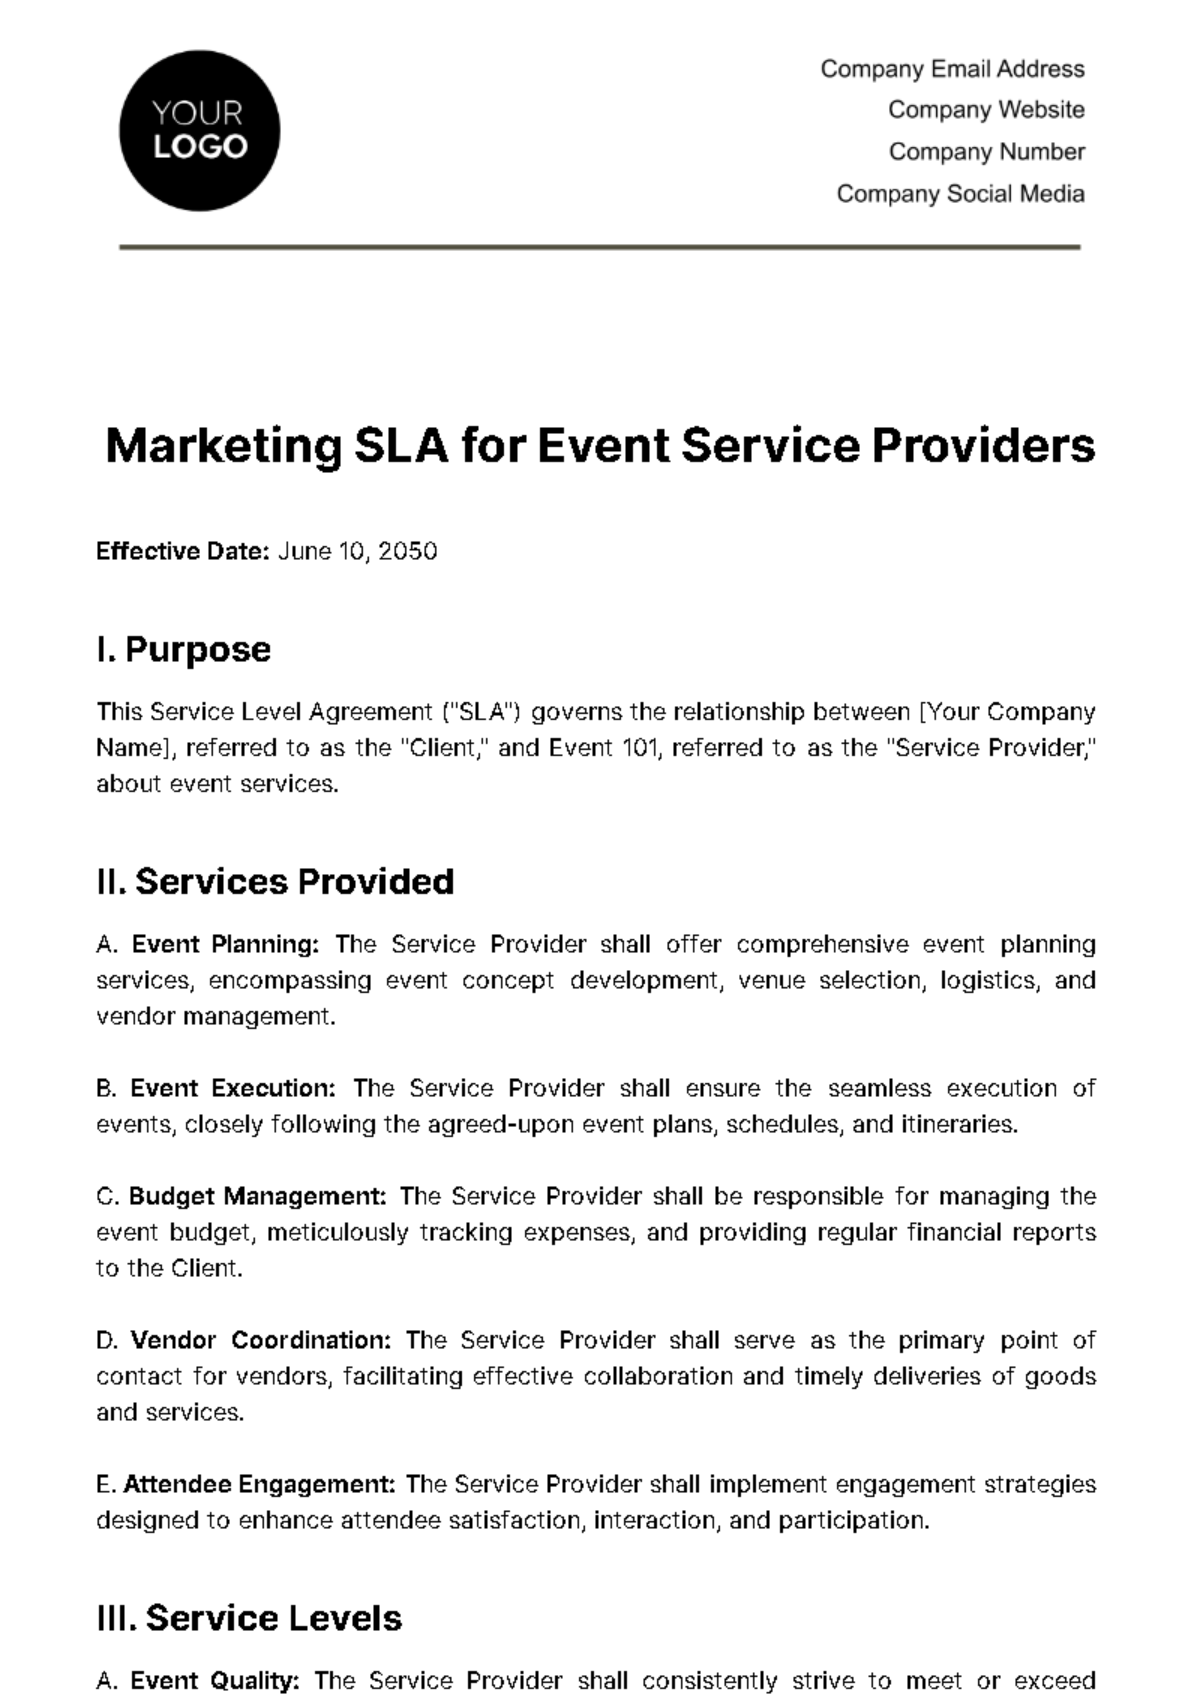 Marketing SLA for Event Service Providers Template